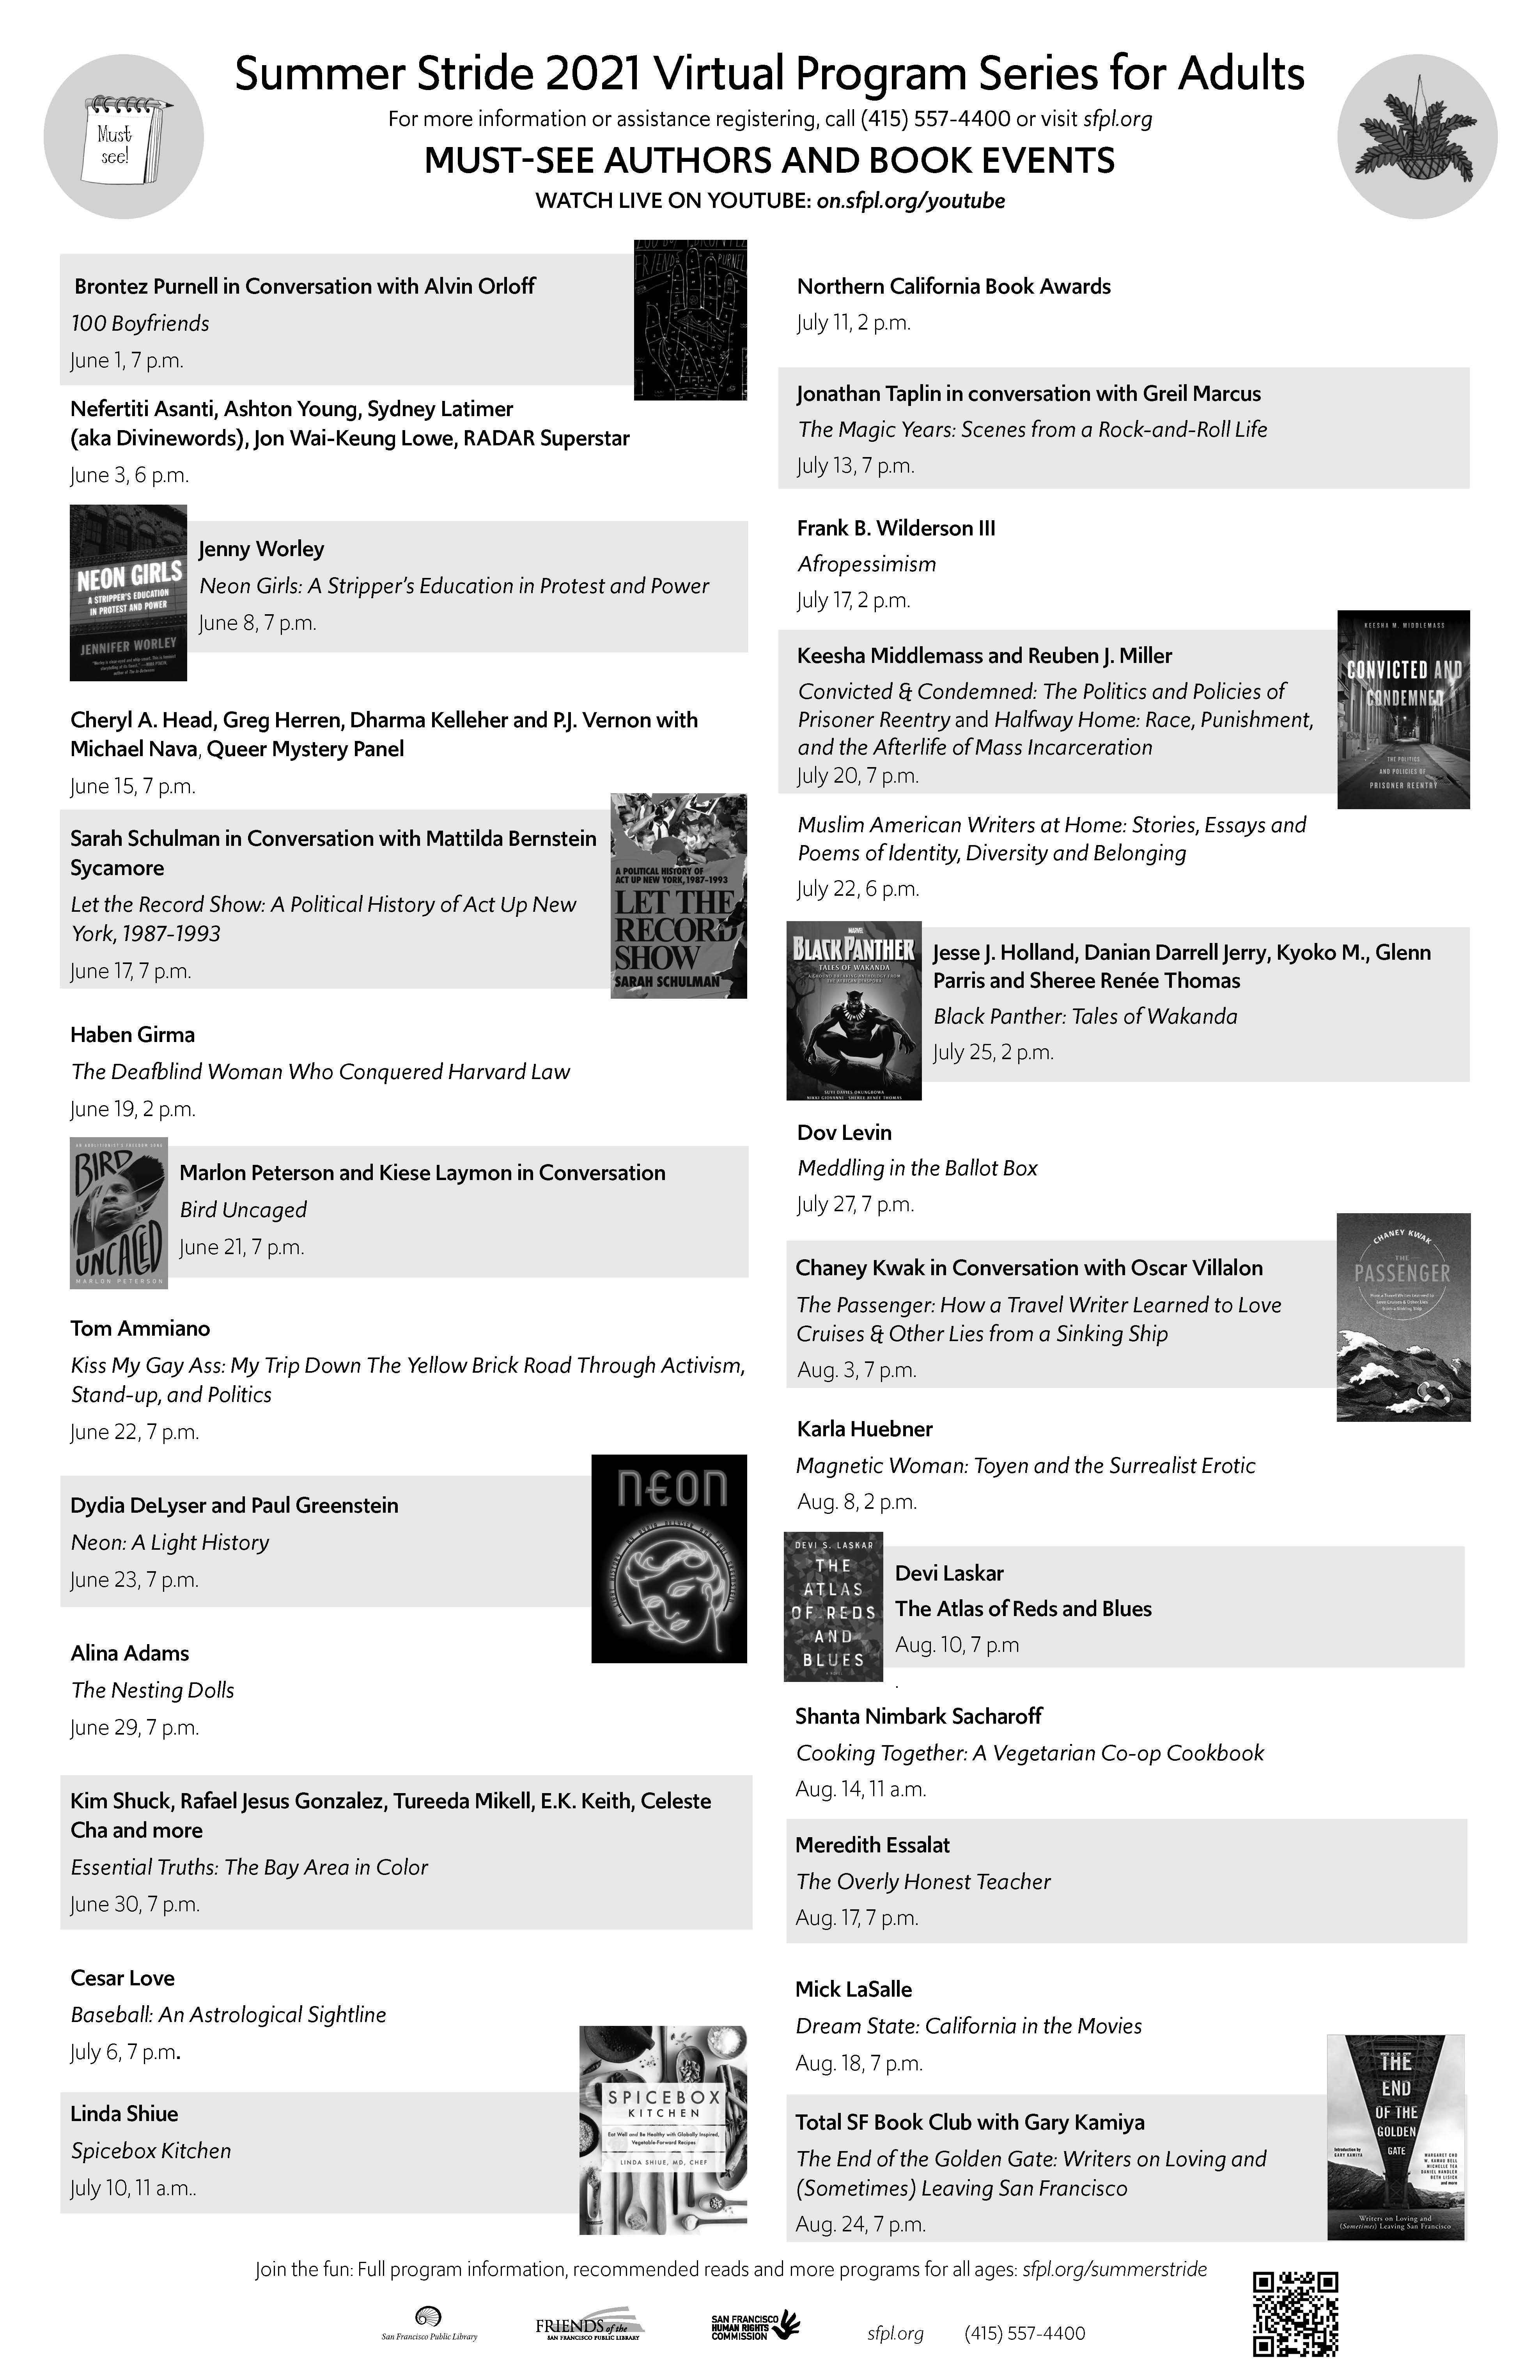 Summer Stride author program listing